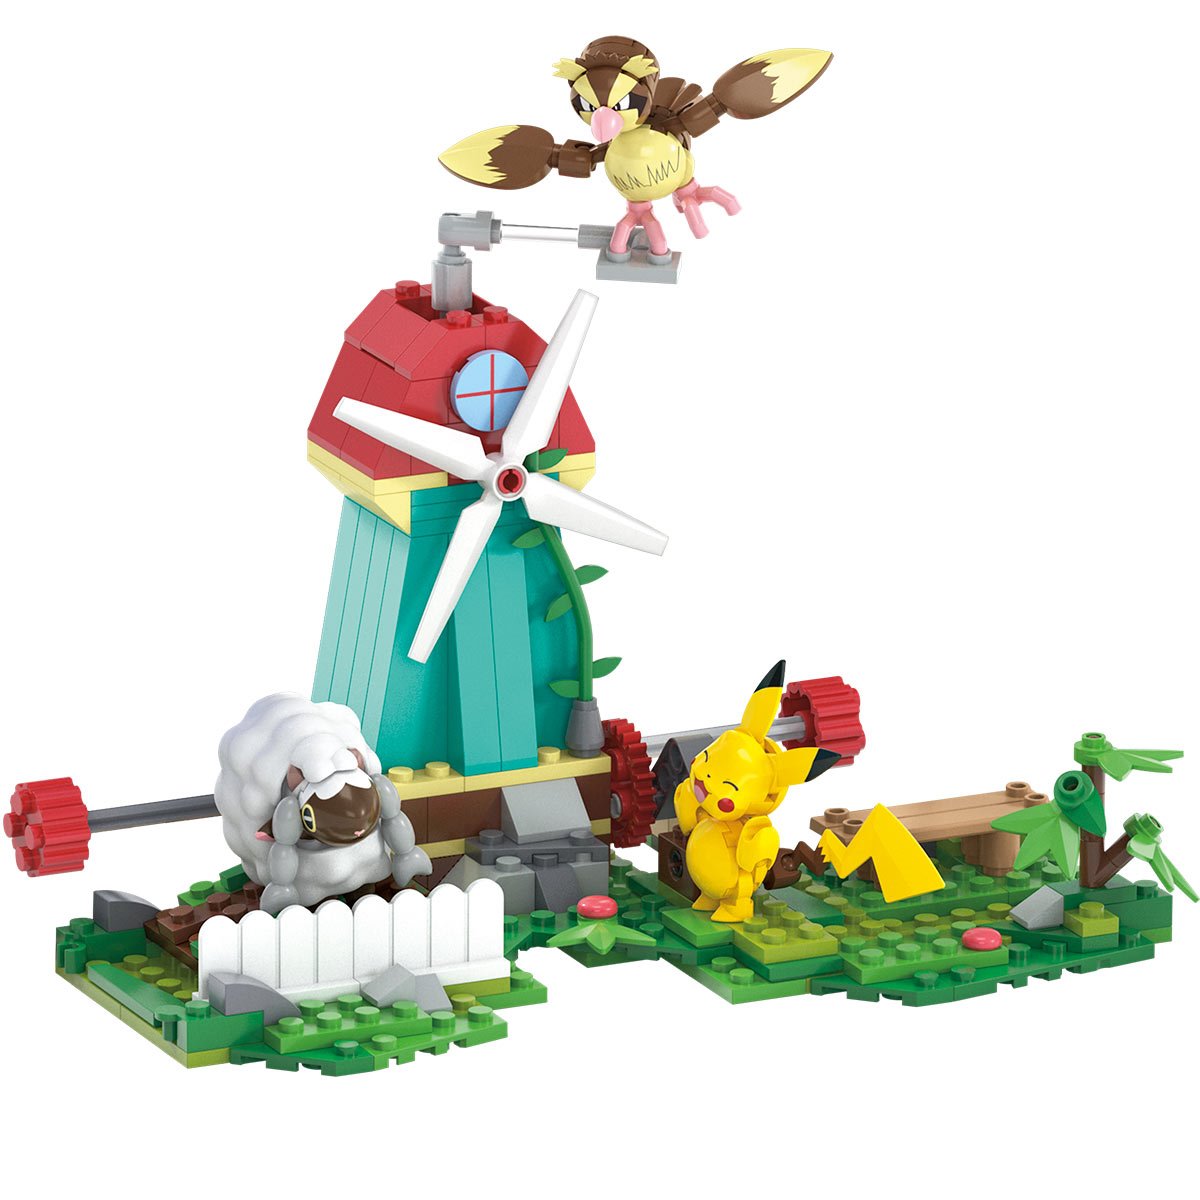 MEGA Pokémon Dragonite 387 Piece Building Set